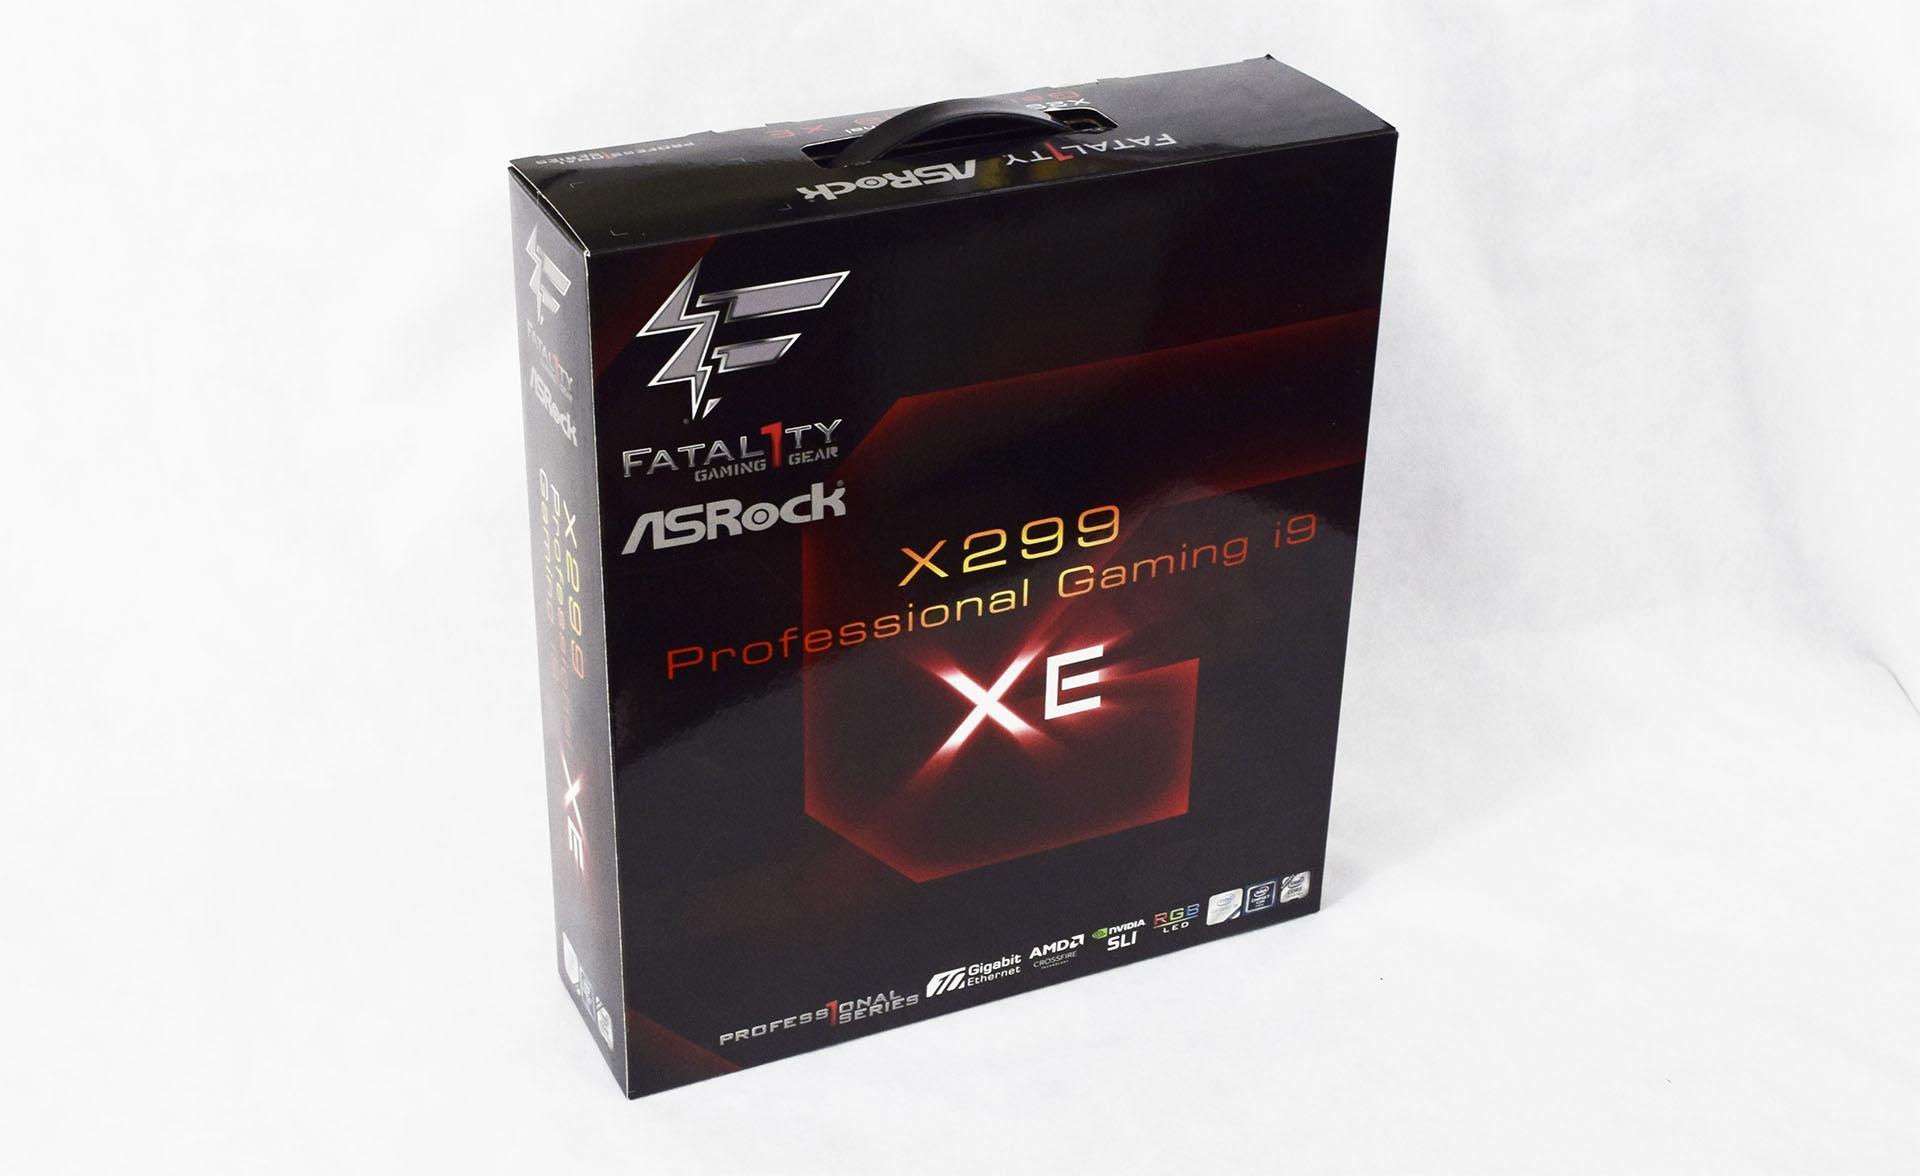 Placa-mãe ASRock Fatal1ty X299 Professional Gaming i9 XE